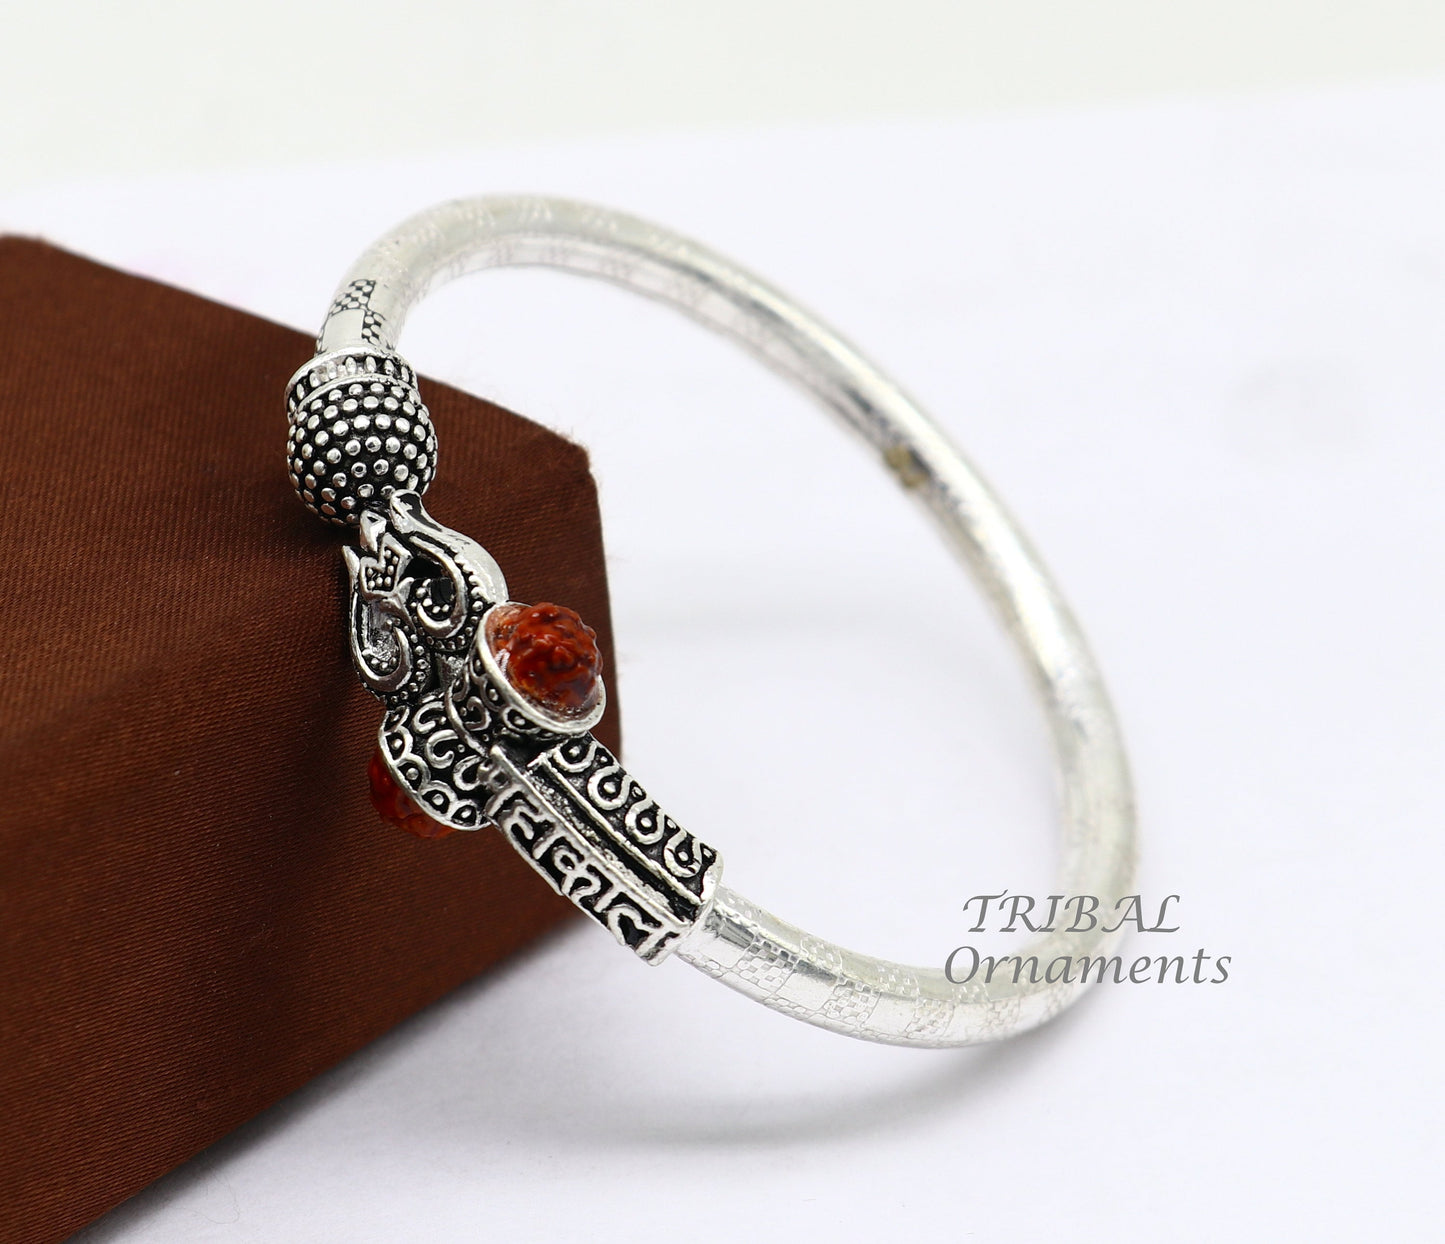 Mahakal kada 925 Sterling silver handmade Lord Shiva trident trishul bangle bracelet natural Rudraksha beads customized kada nsk612 - TRIBAL ORNAMENTS